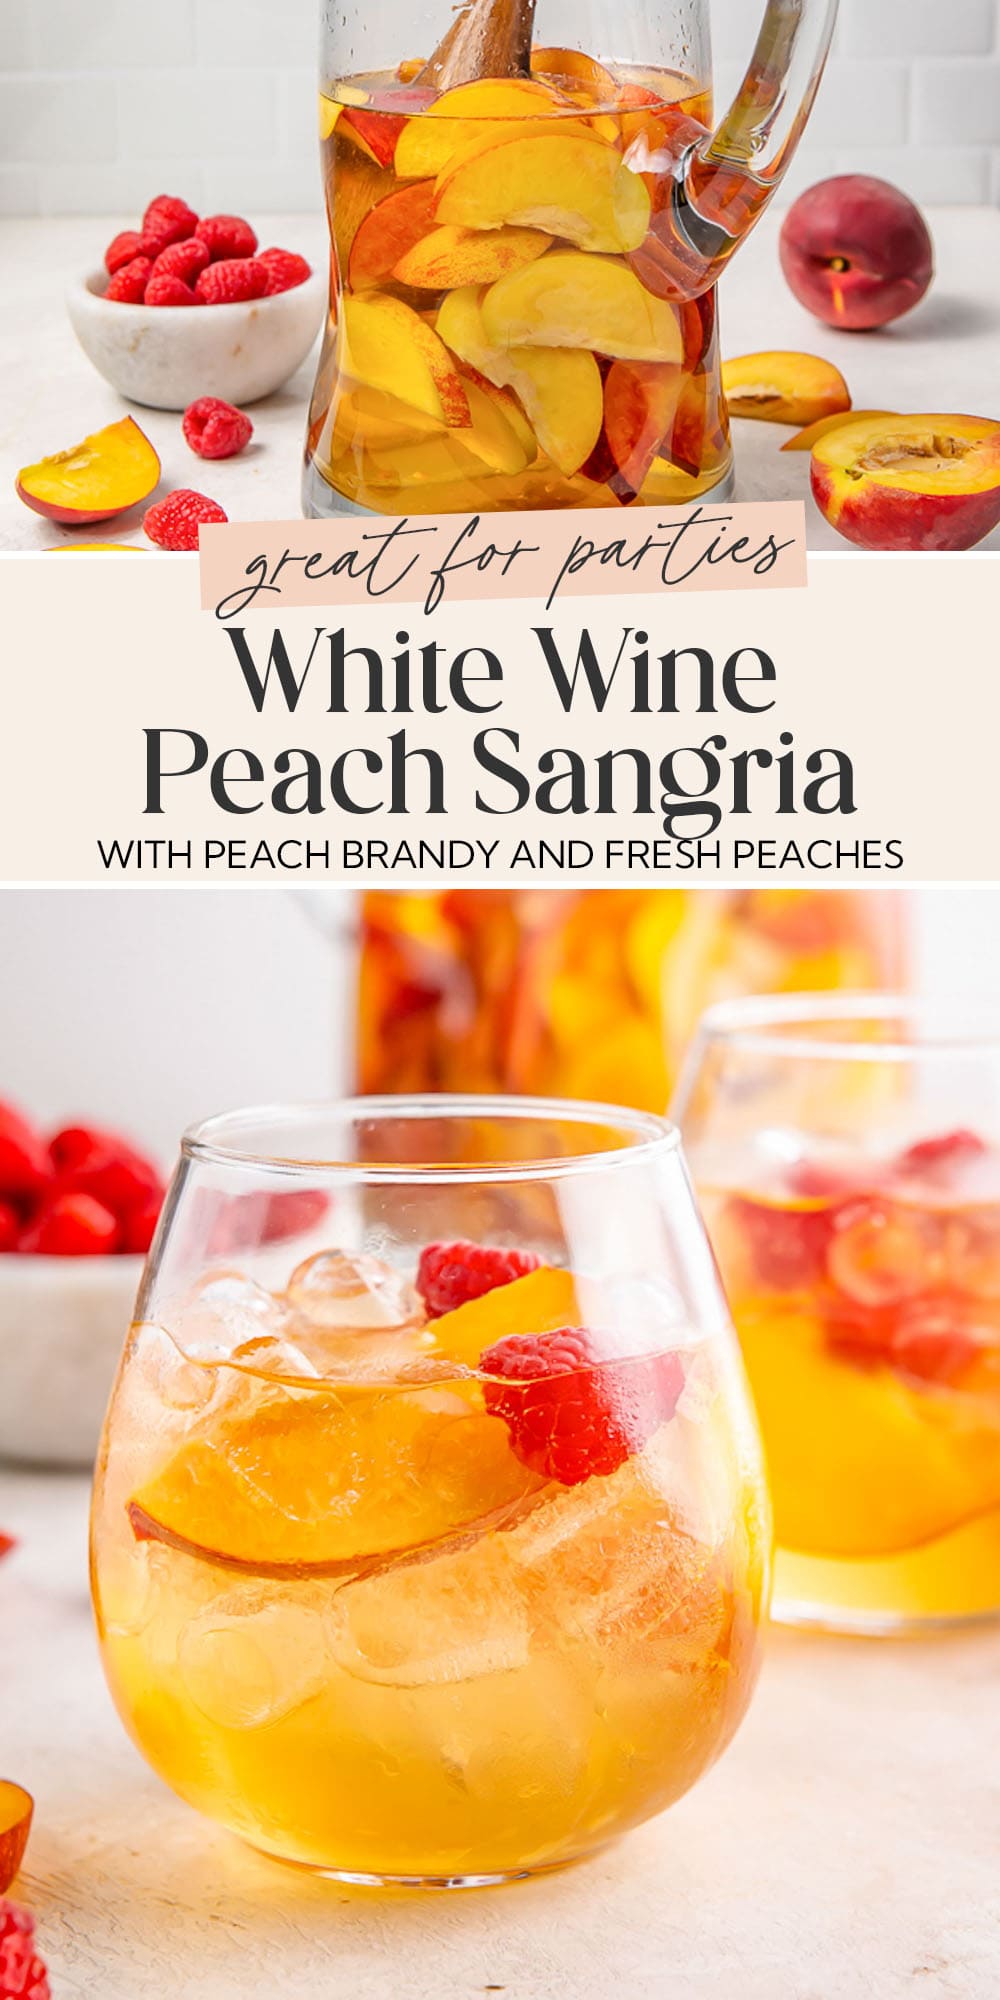 Pin graphic for peach white wine sangria.